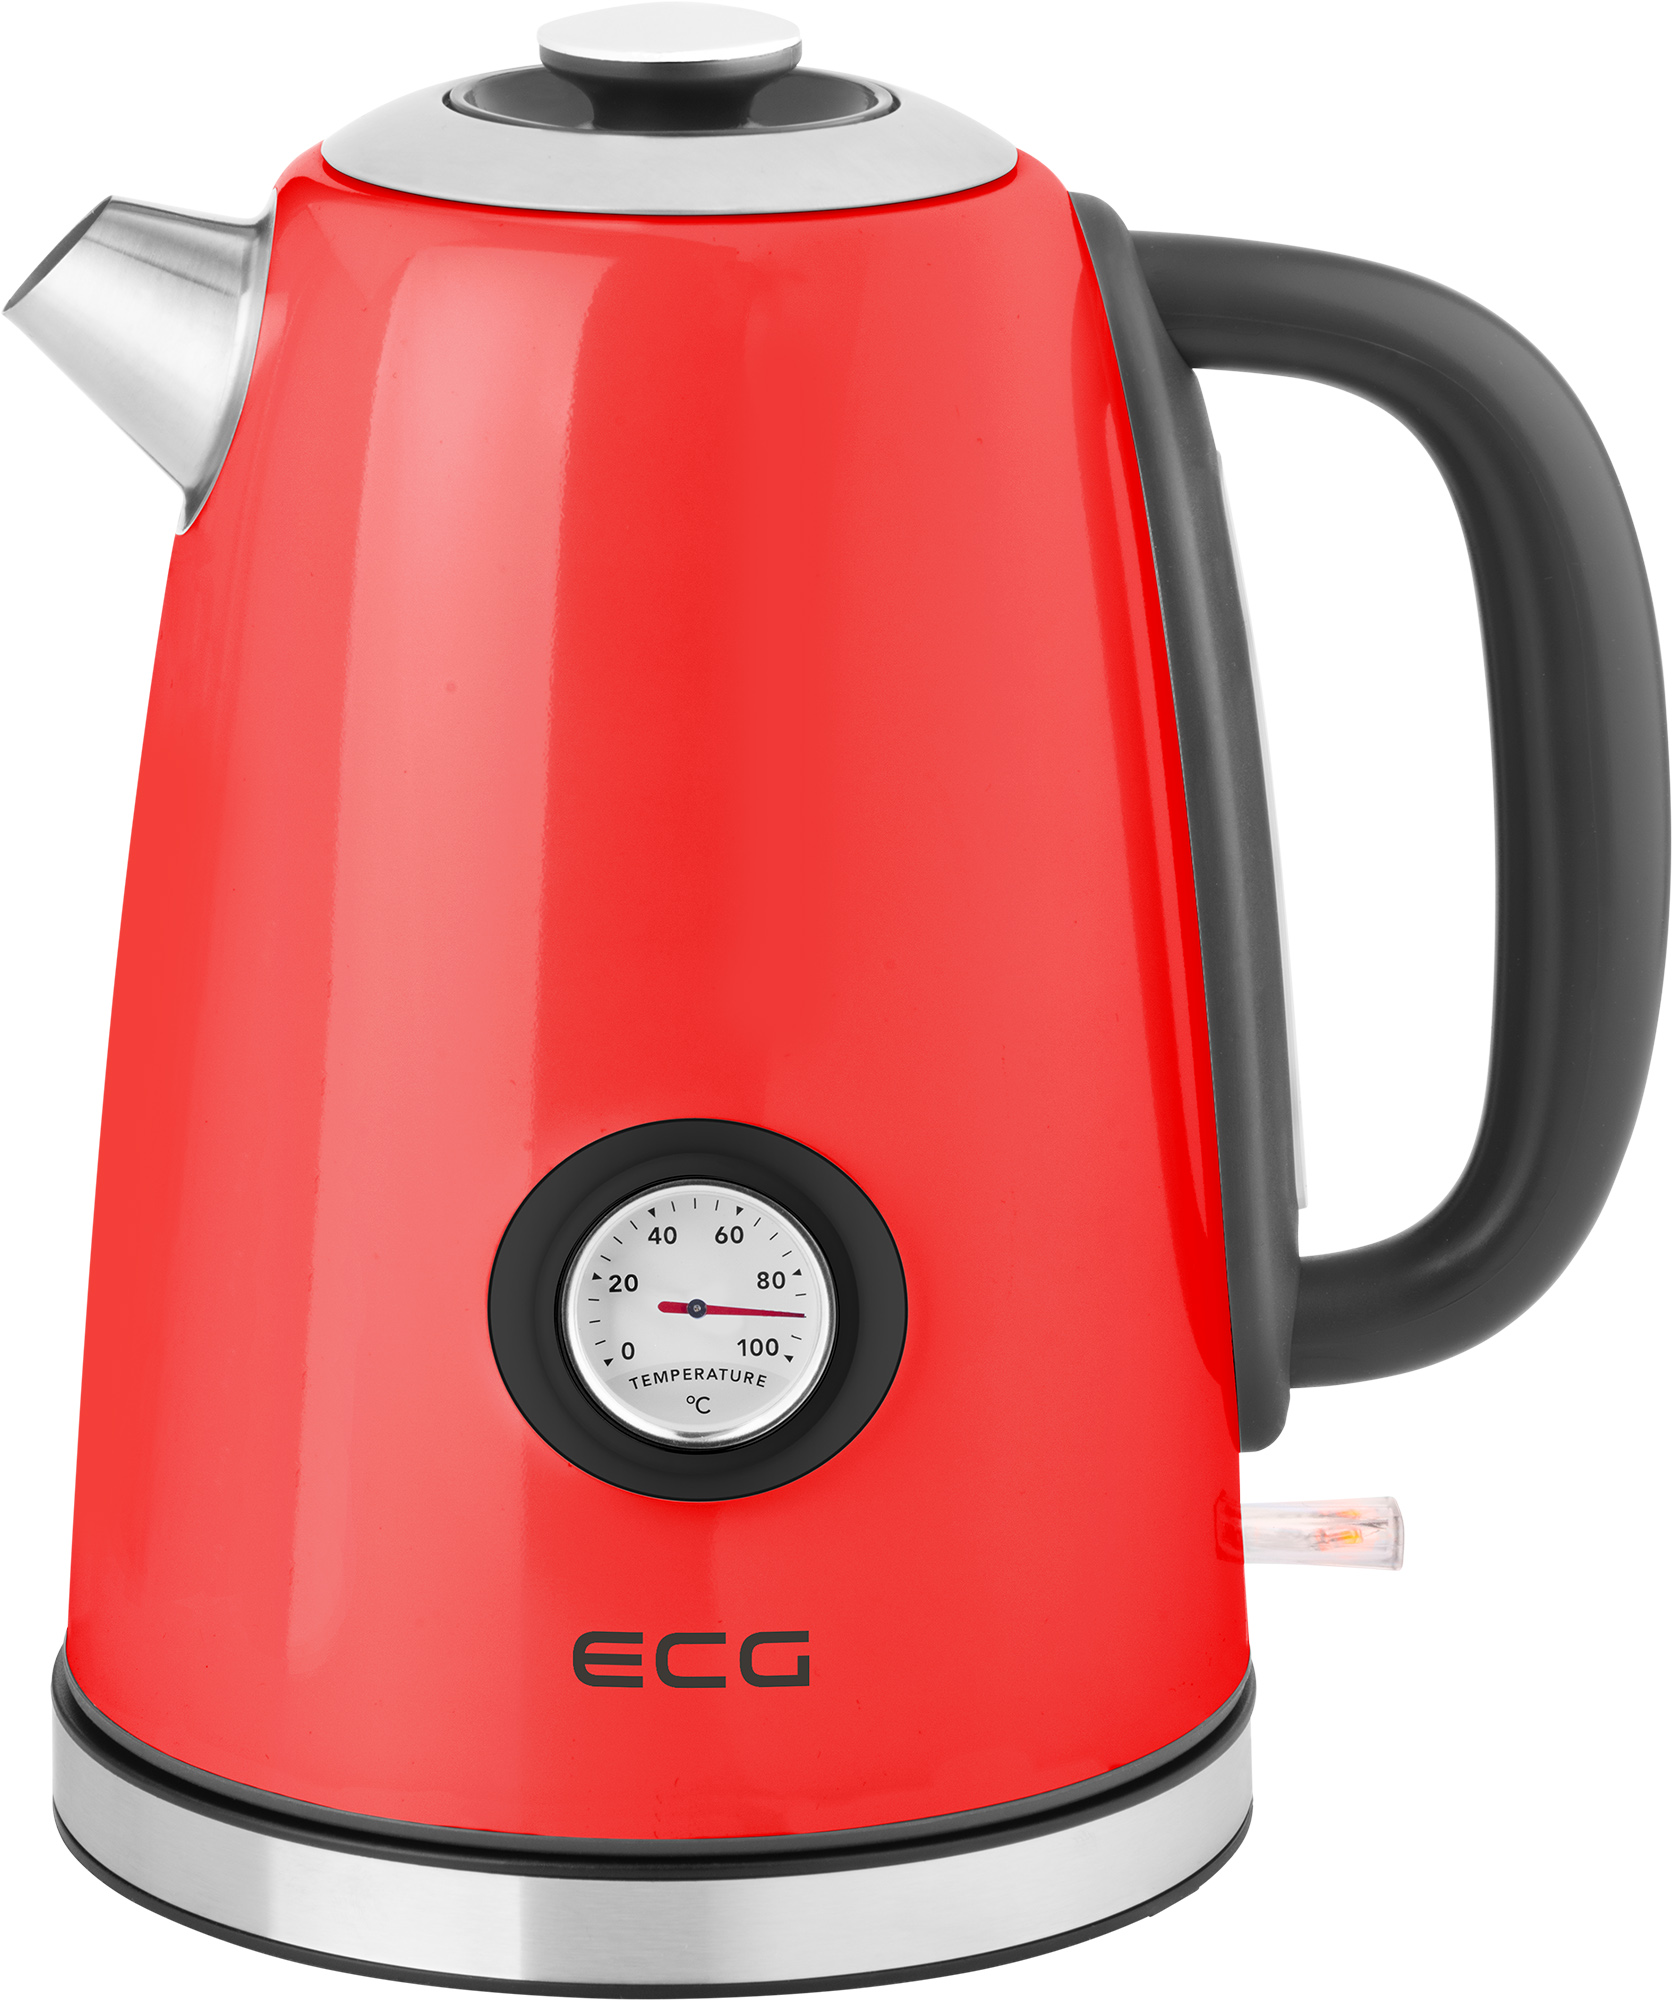 ECG RK 1700 Wasserkocher, Corsa Rot Magnifica